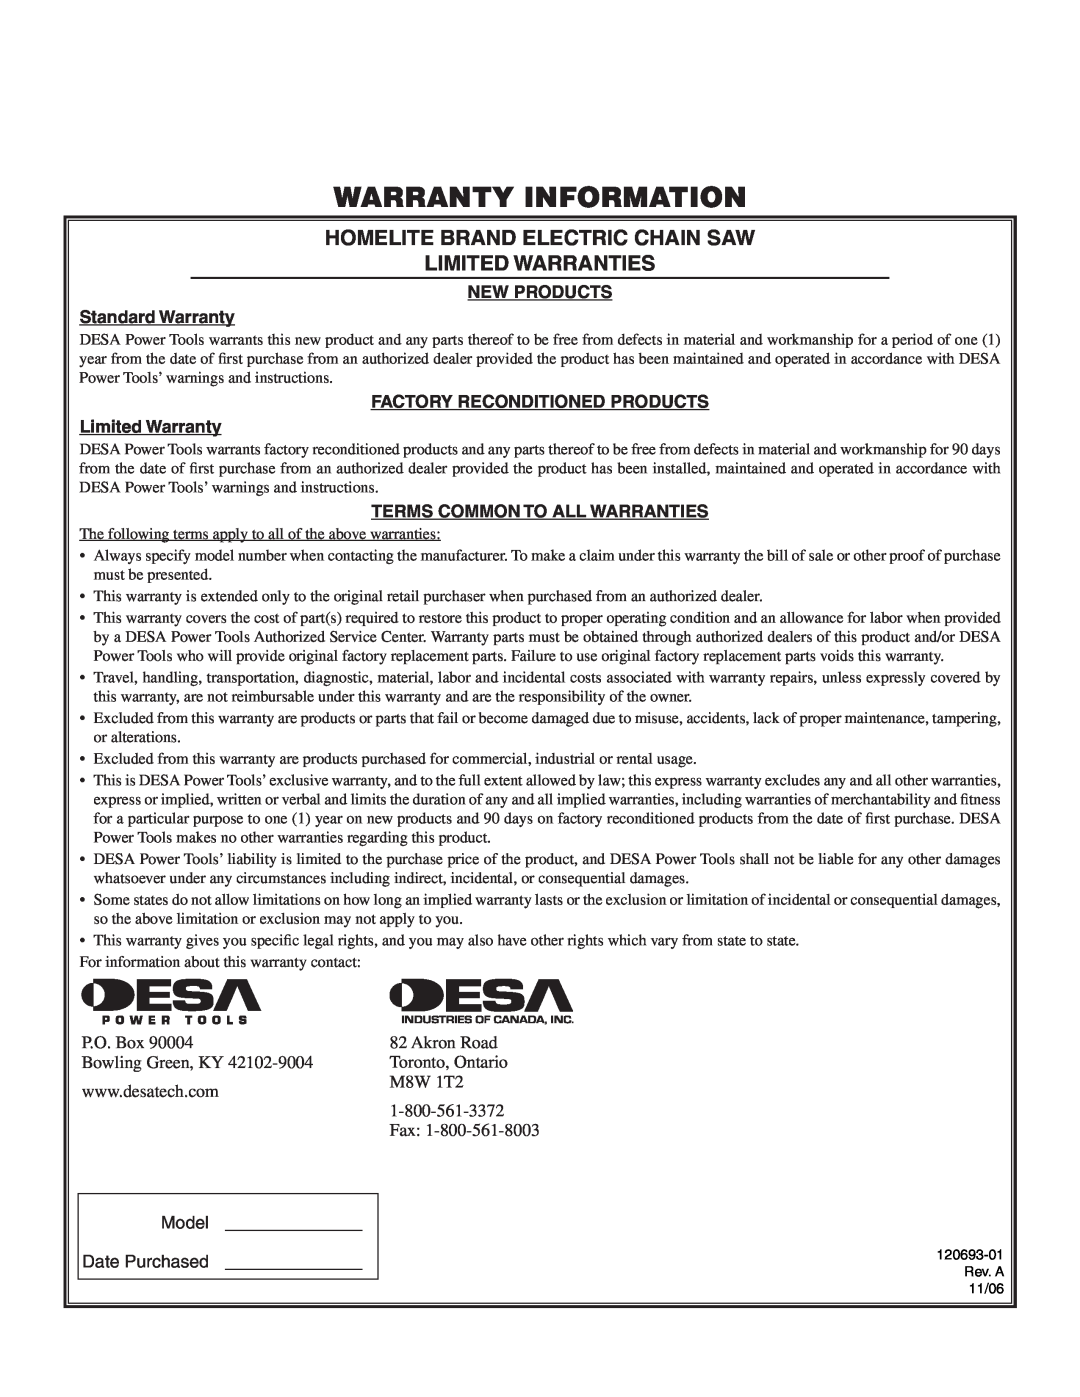 Homelite UT13130 Warranty Information, Homelite brand ELECTRIC CHAIN SAW LIMITED WARRANTIES, Model Date Purchased 